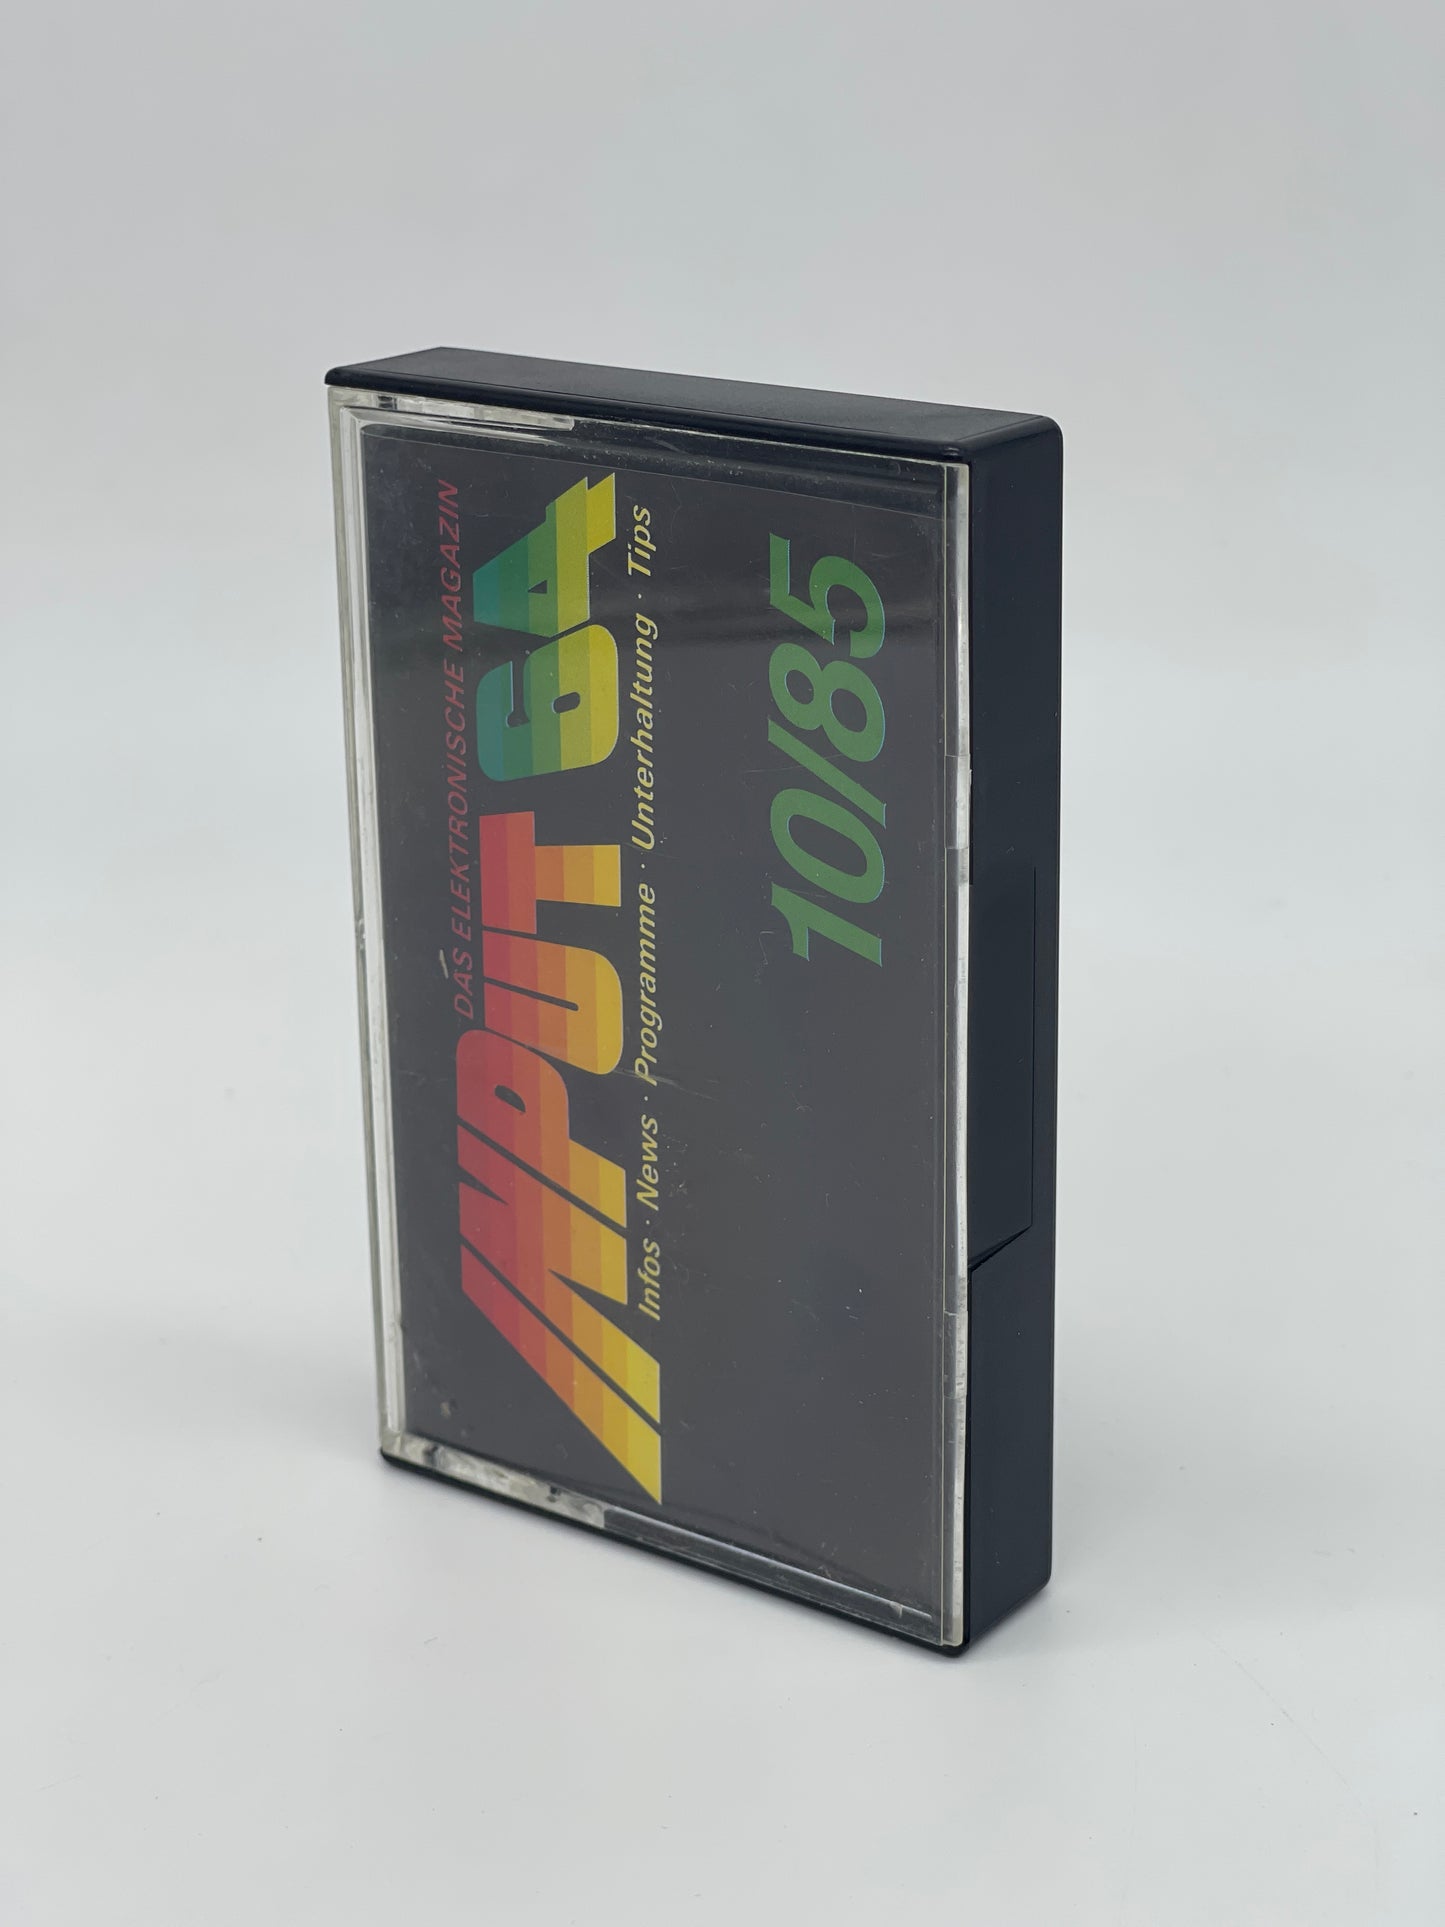 Input 64 "The electronic magazine" datasette / cassette issue 10/85 